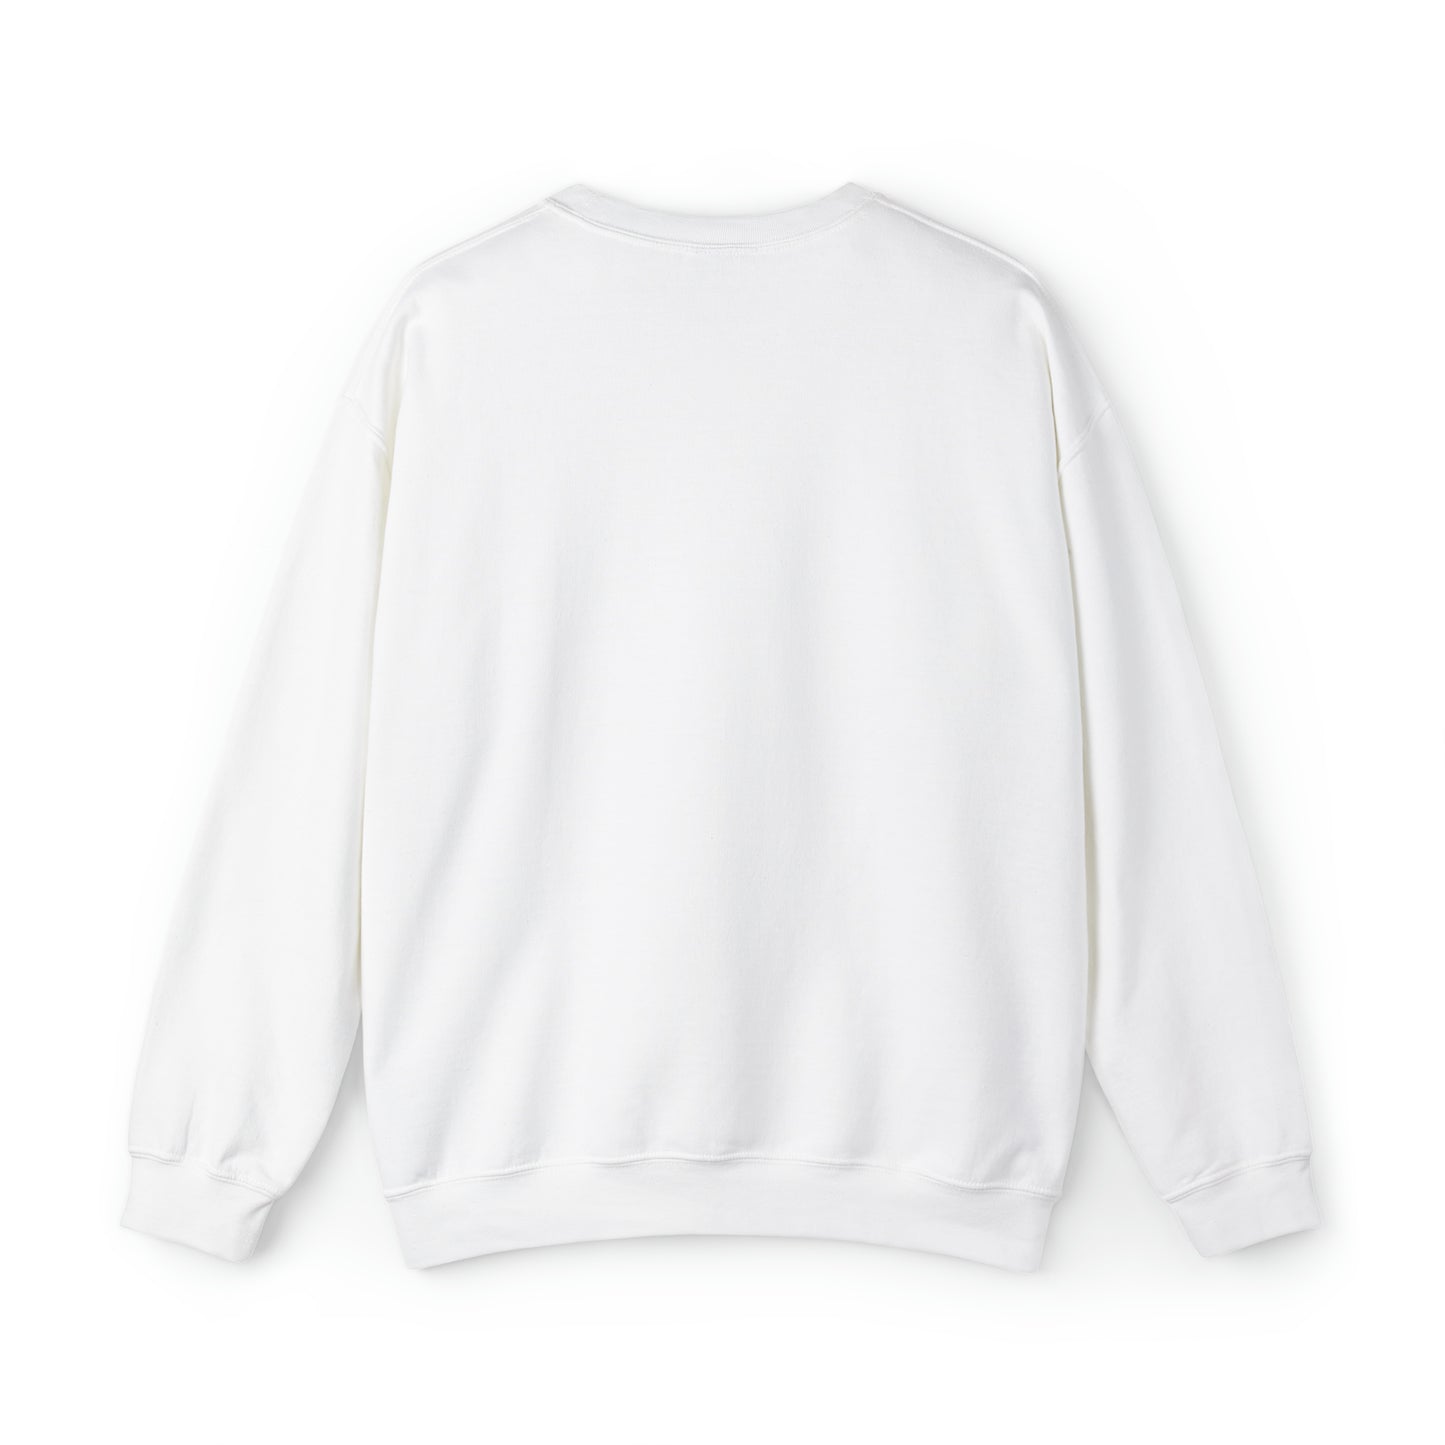 Grindhead Sweatshirt White Crewneck Sweatshirt